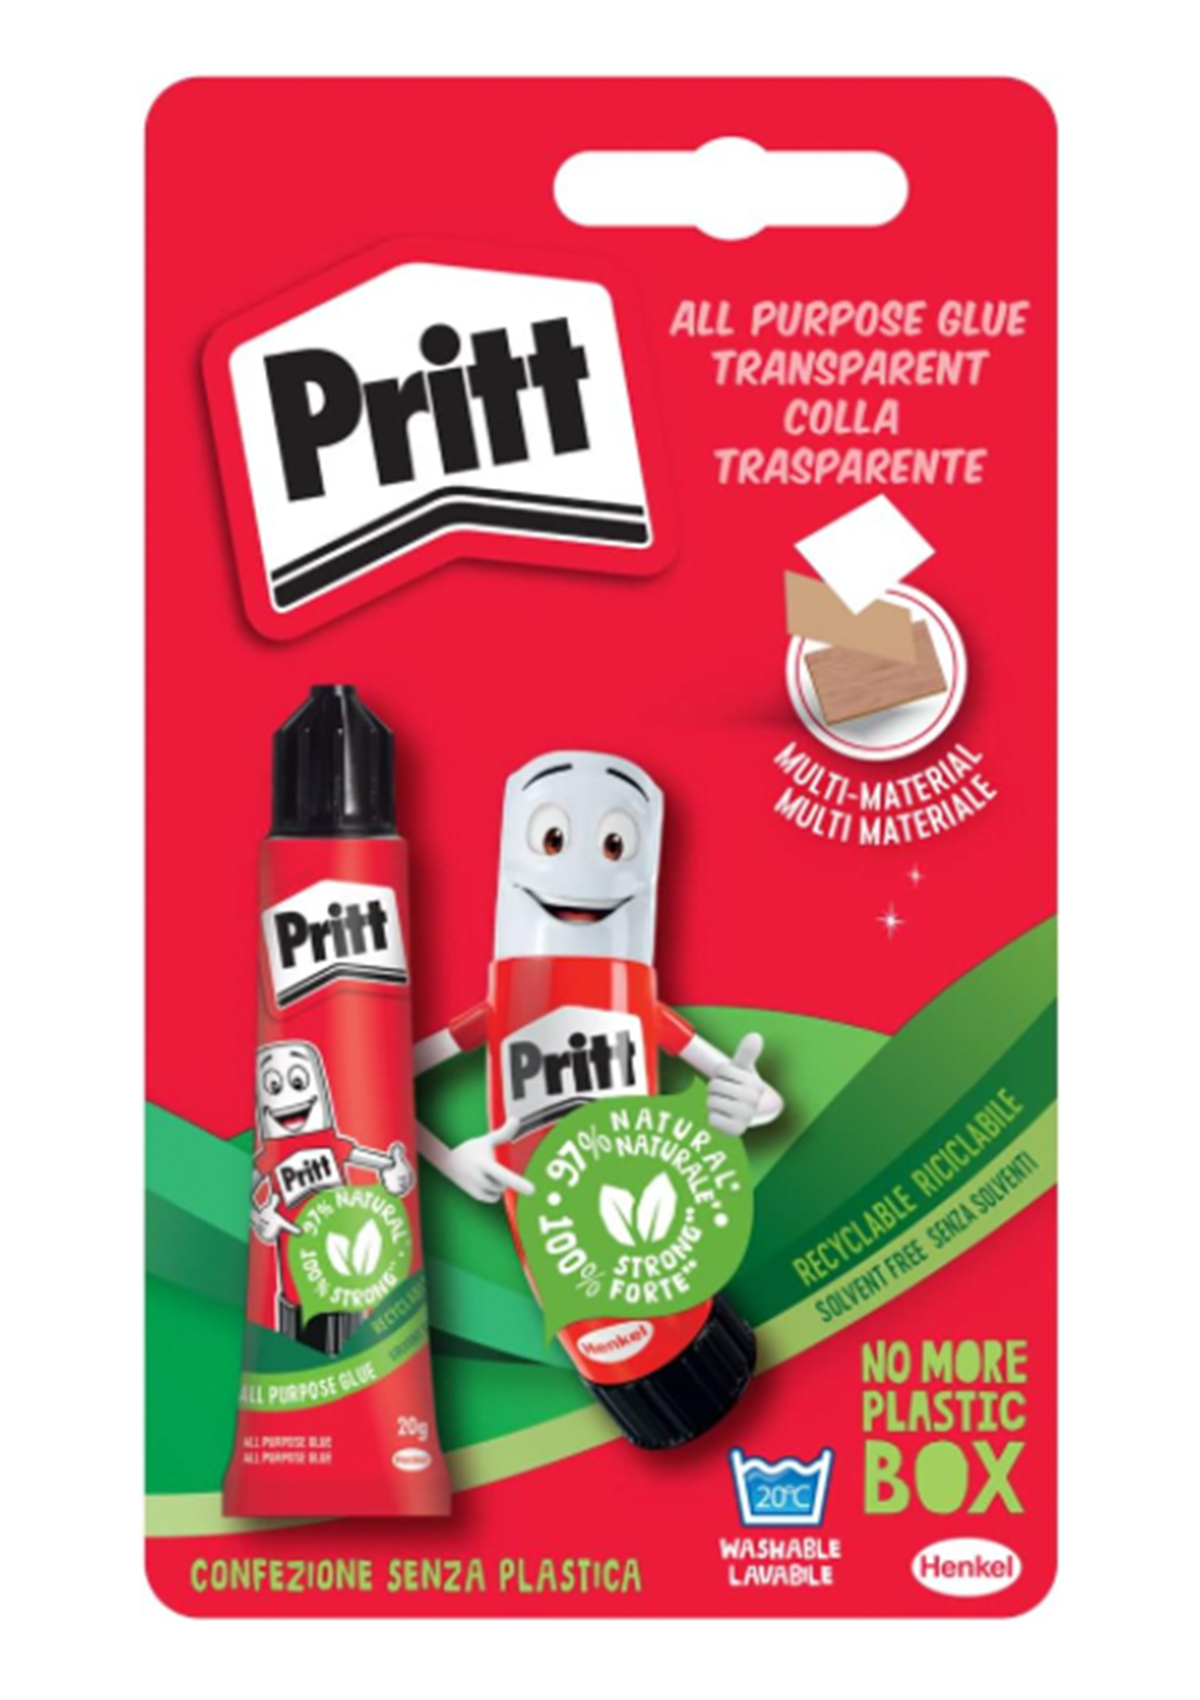 Pritt all purpose solvent free adhesive glue 20g - clear/transparent